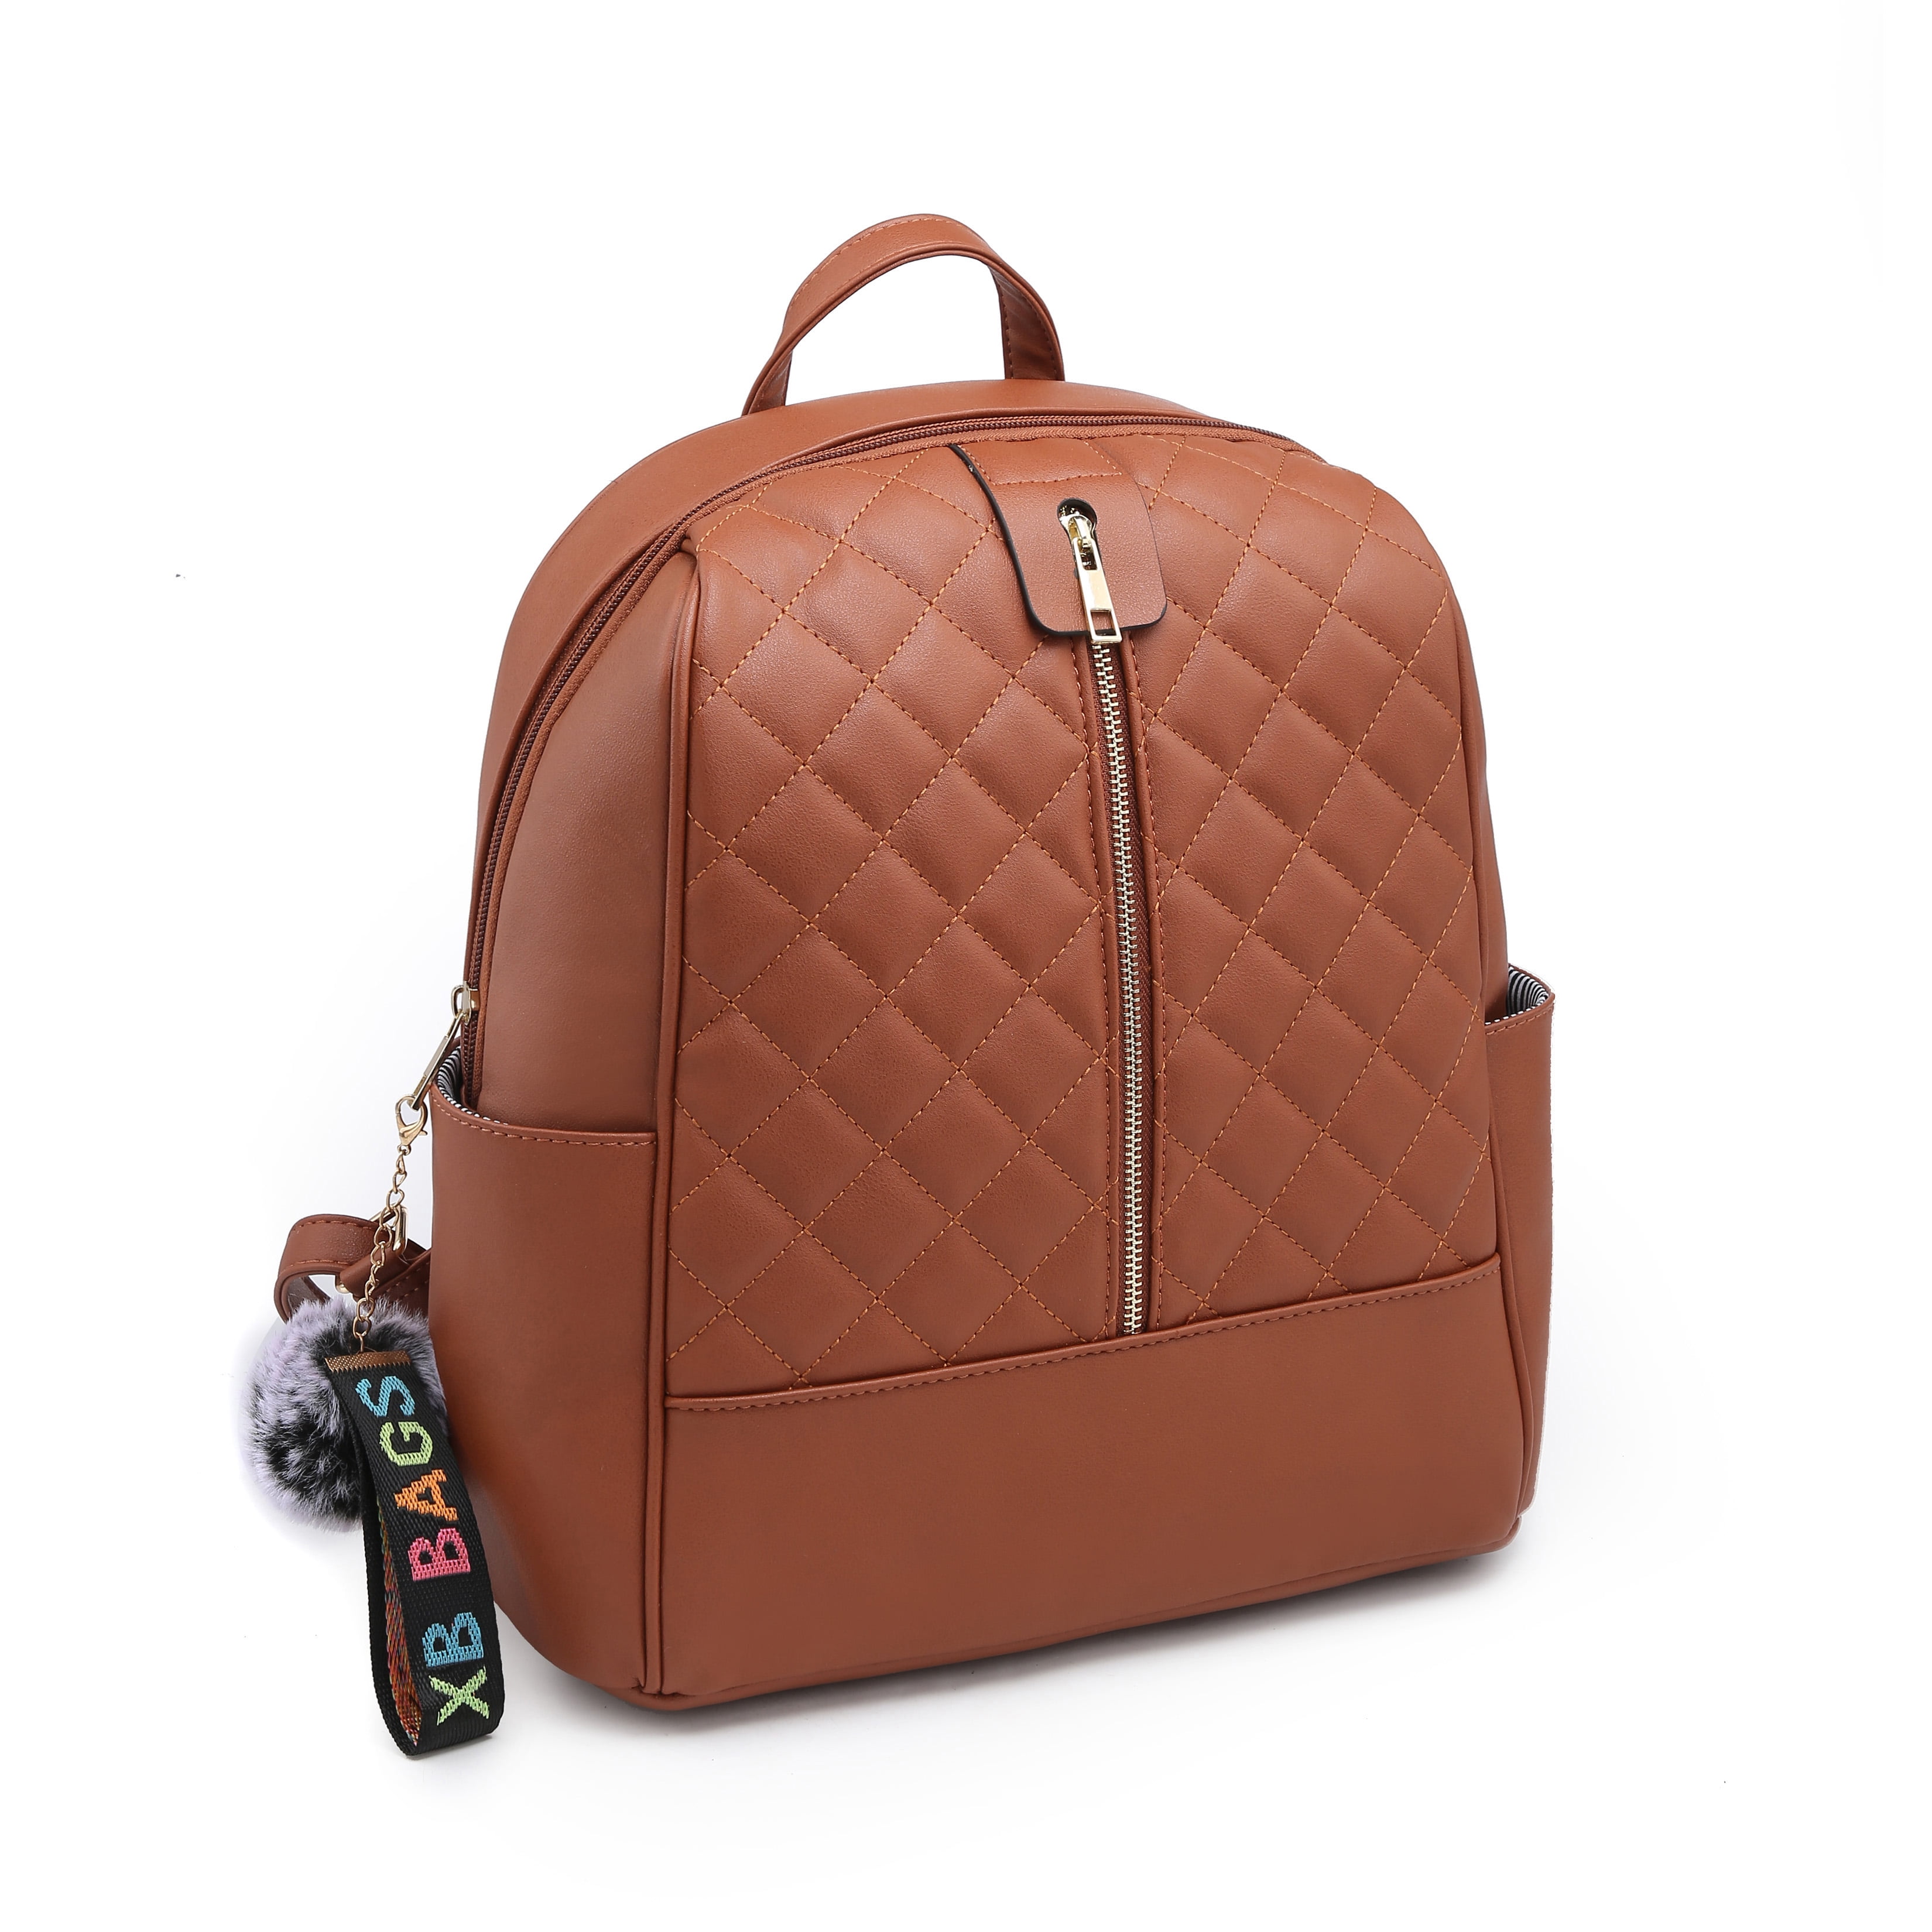 Women Girls School PU Leather Shoulder Bags Backpack Travel Rucksack Handbag LOT 